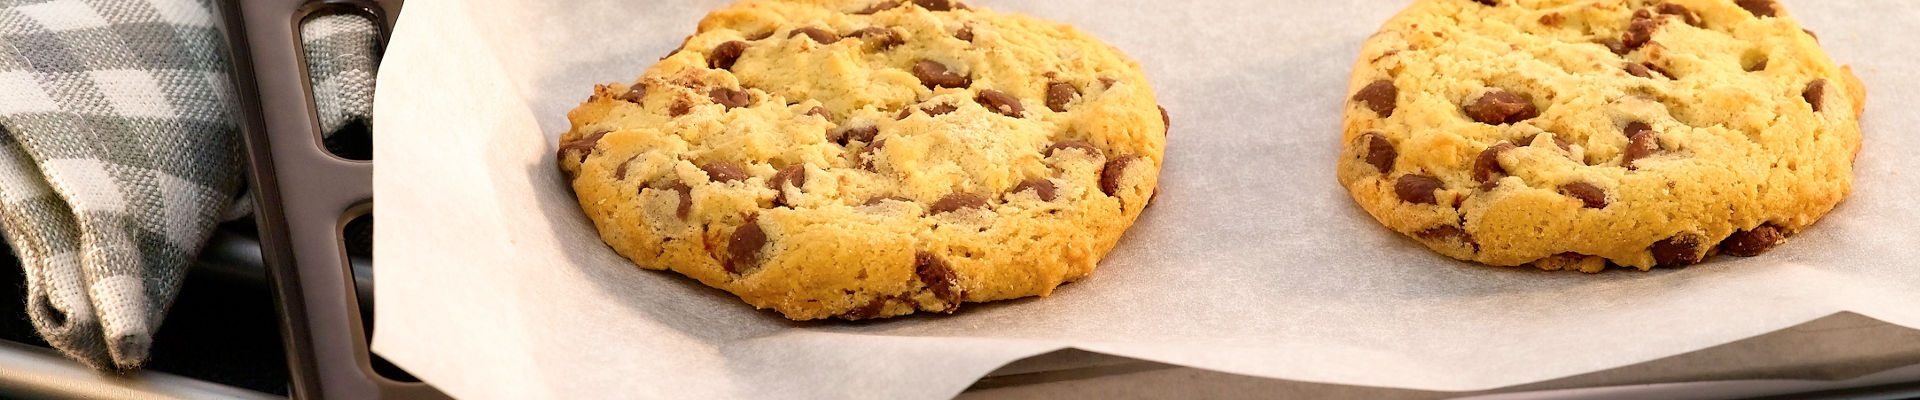  cookie 表上的 cookie 以标语纸排列